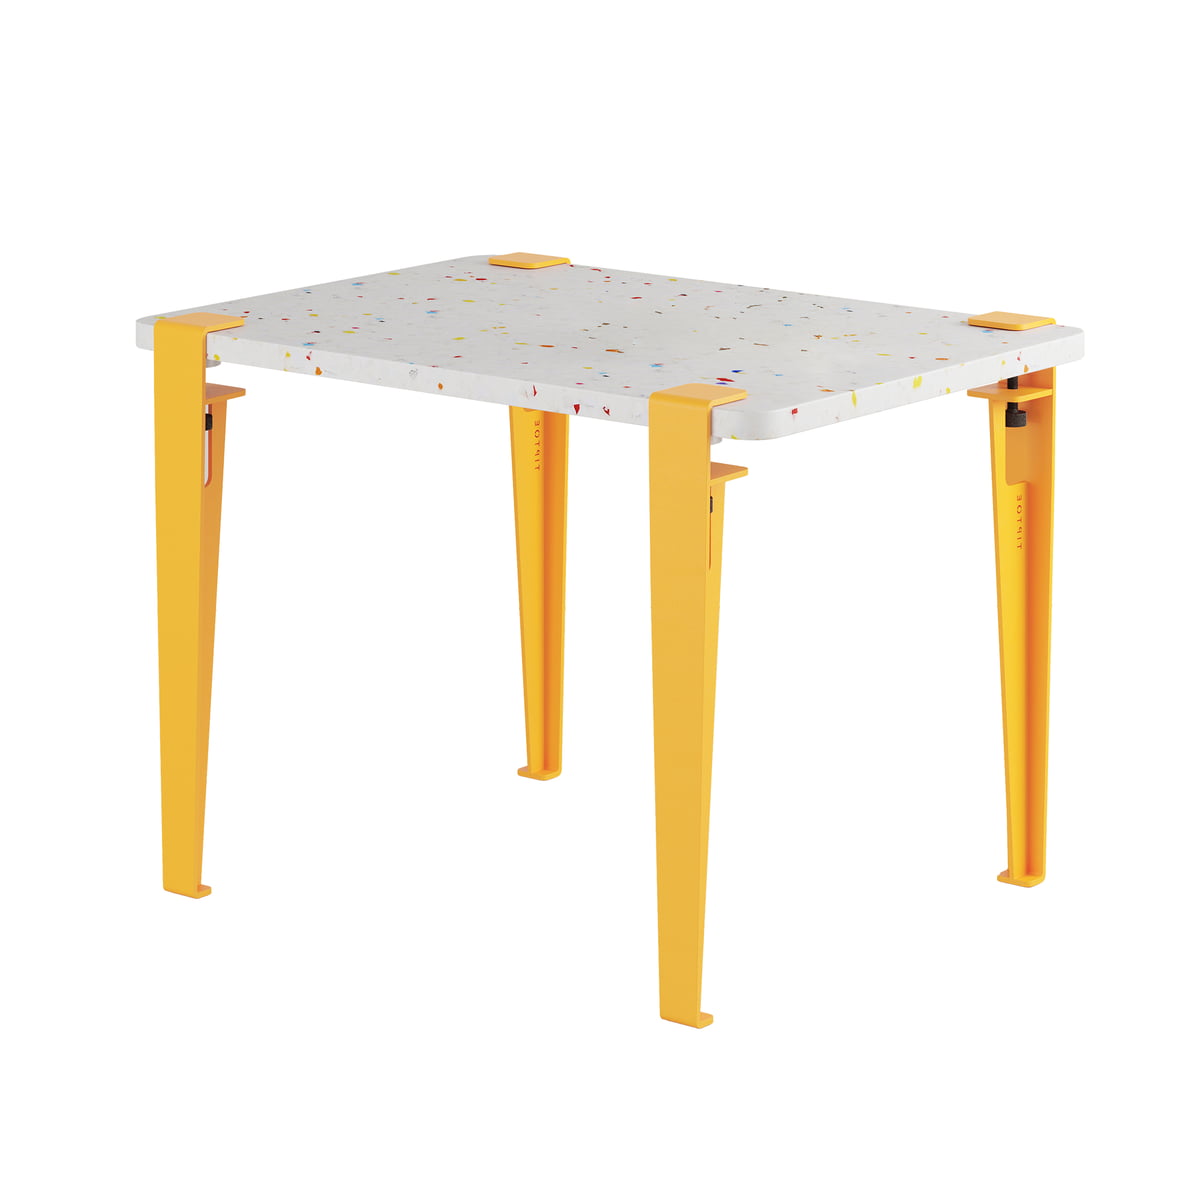 TipToe - Table leg H 90 cm